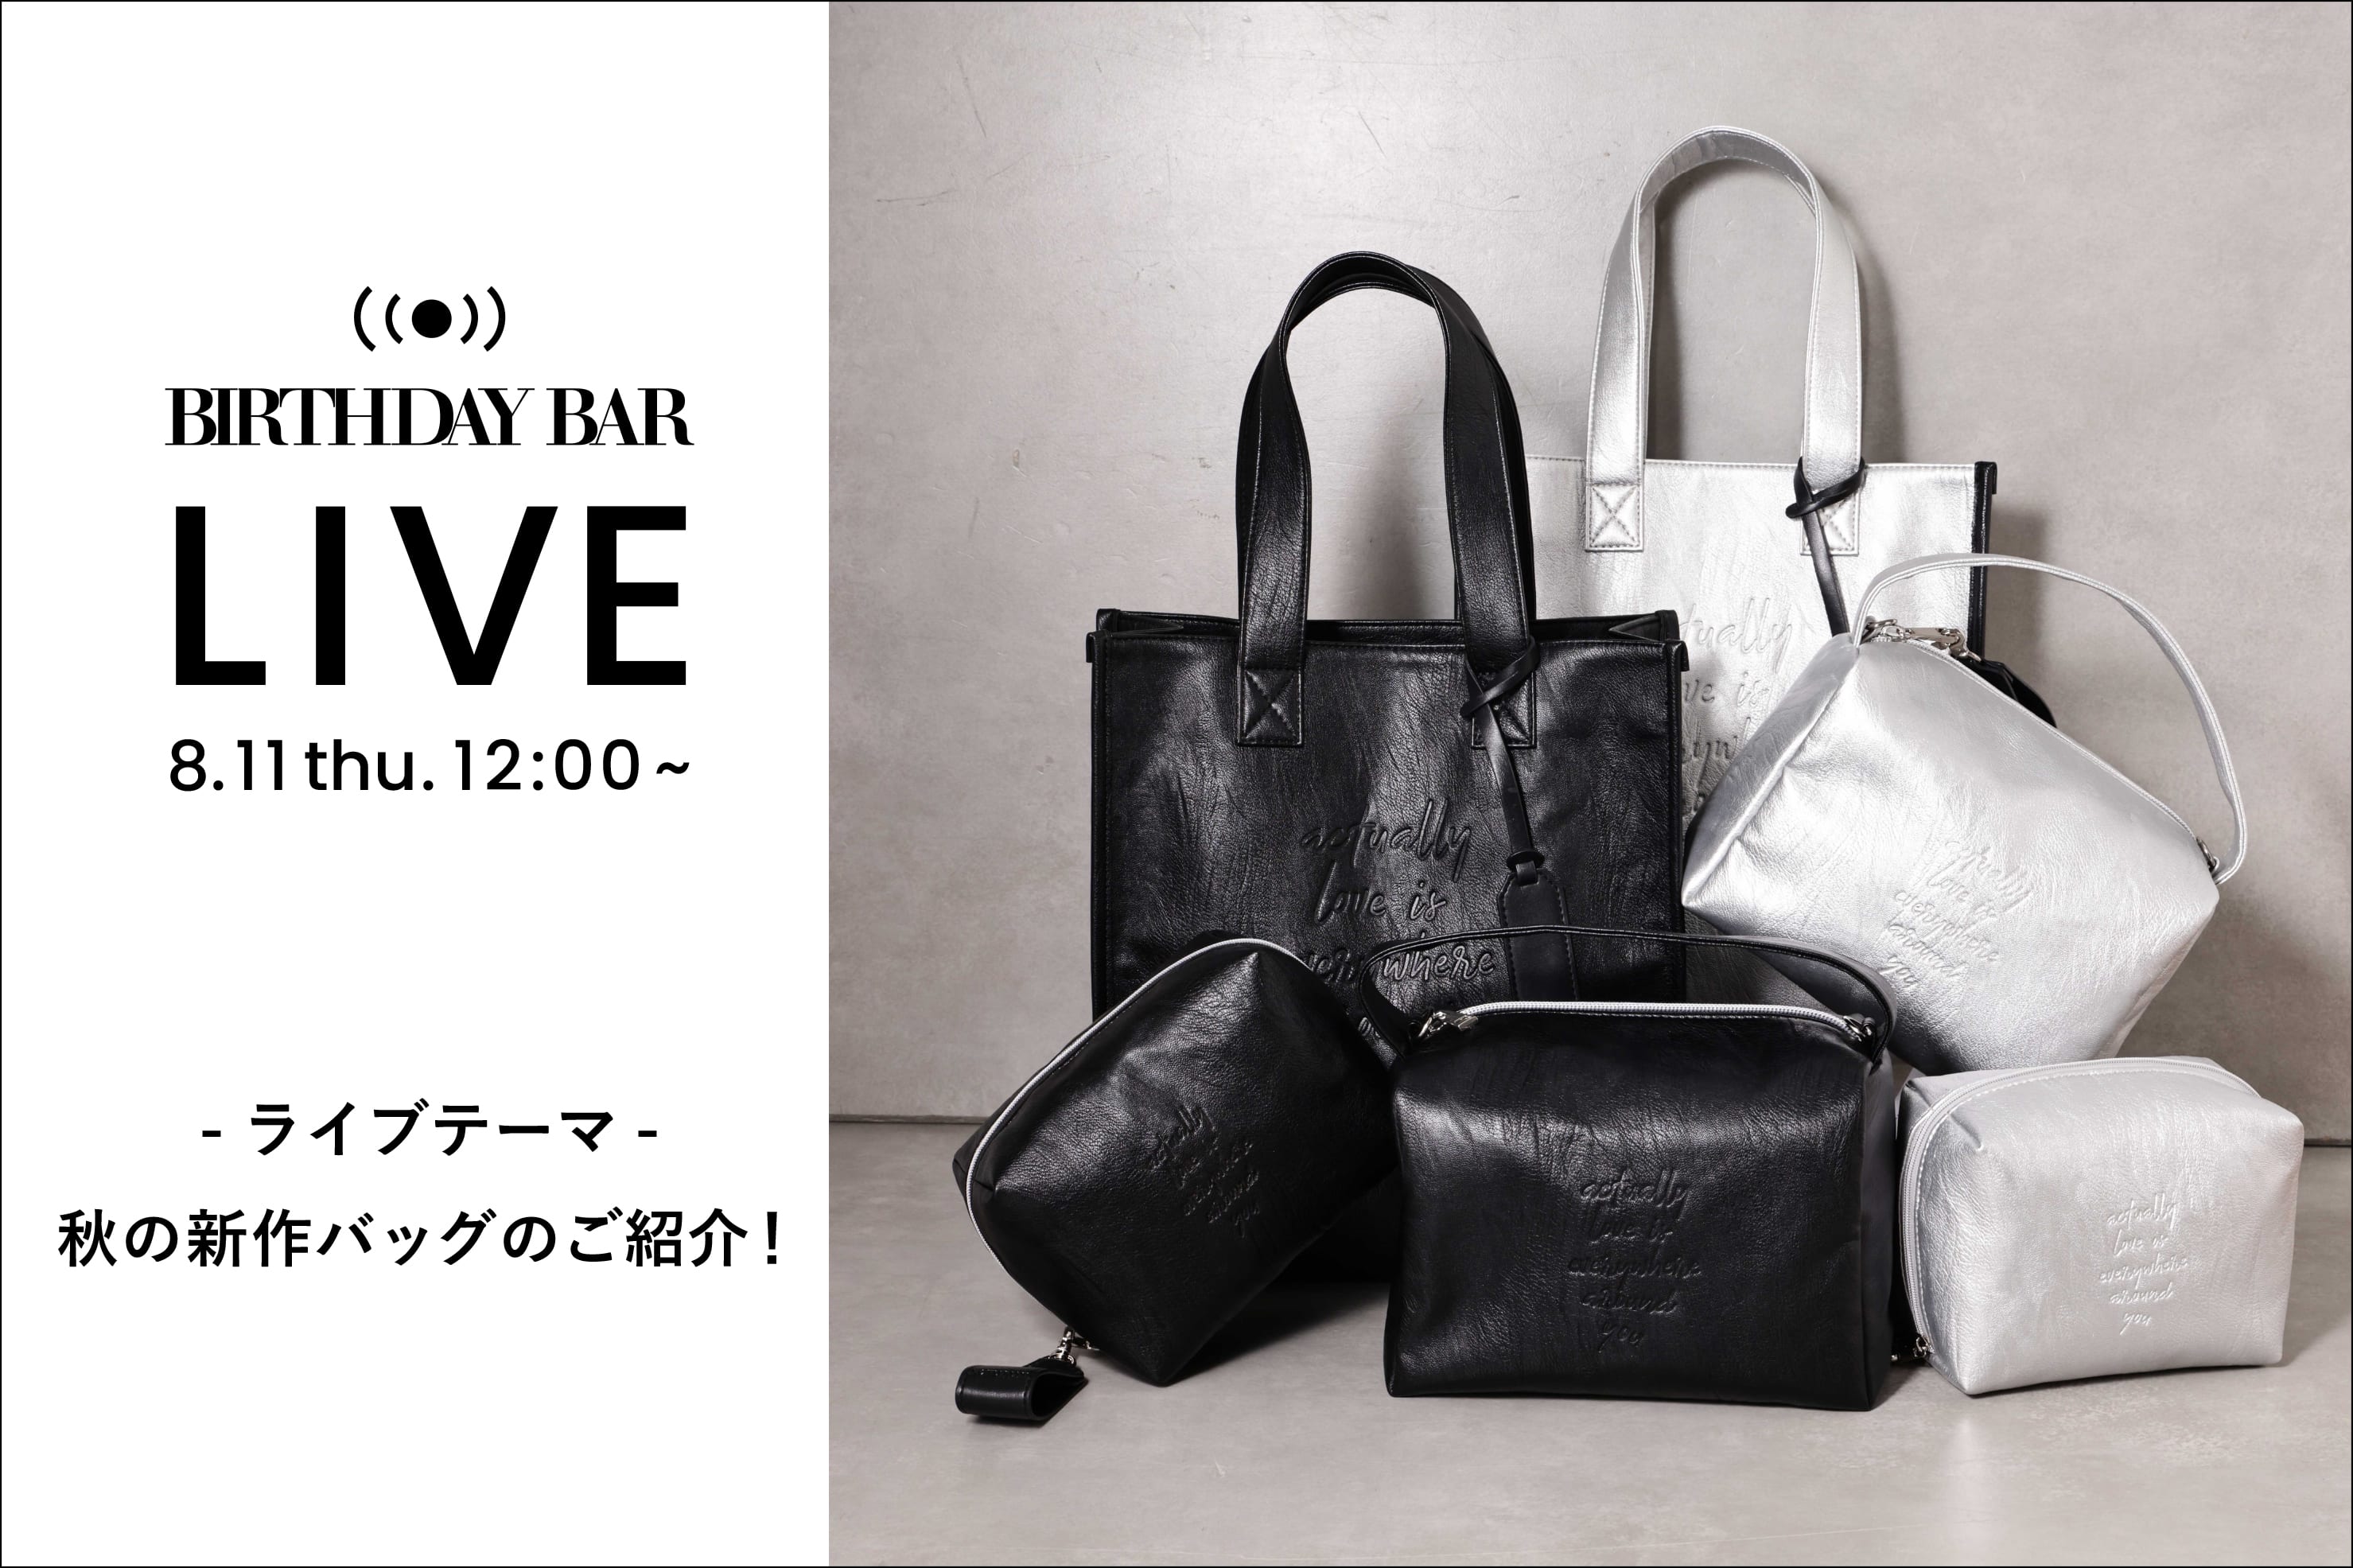 BIRTHDAY BAR 【予告】BIRTHDAY BAR LIVE vol.14 8/11(木)12:00～ START!